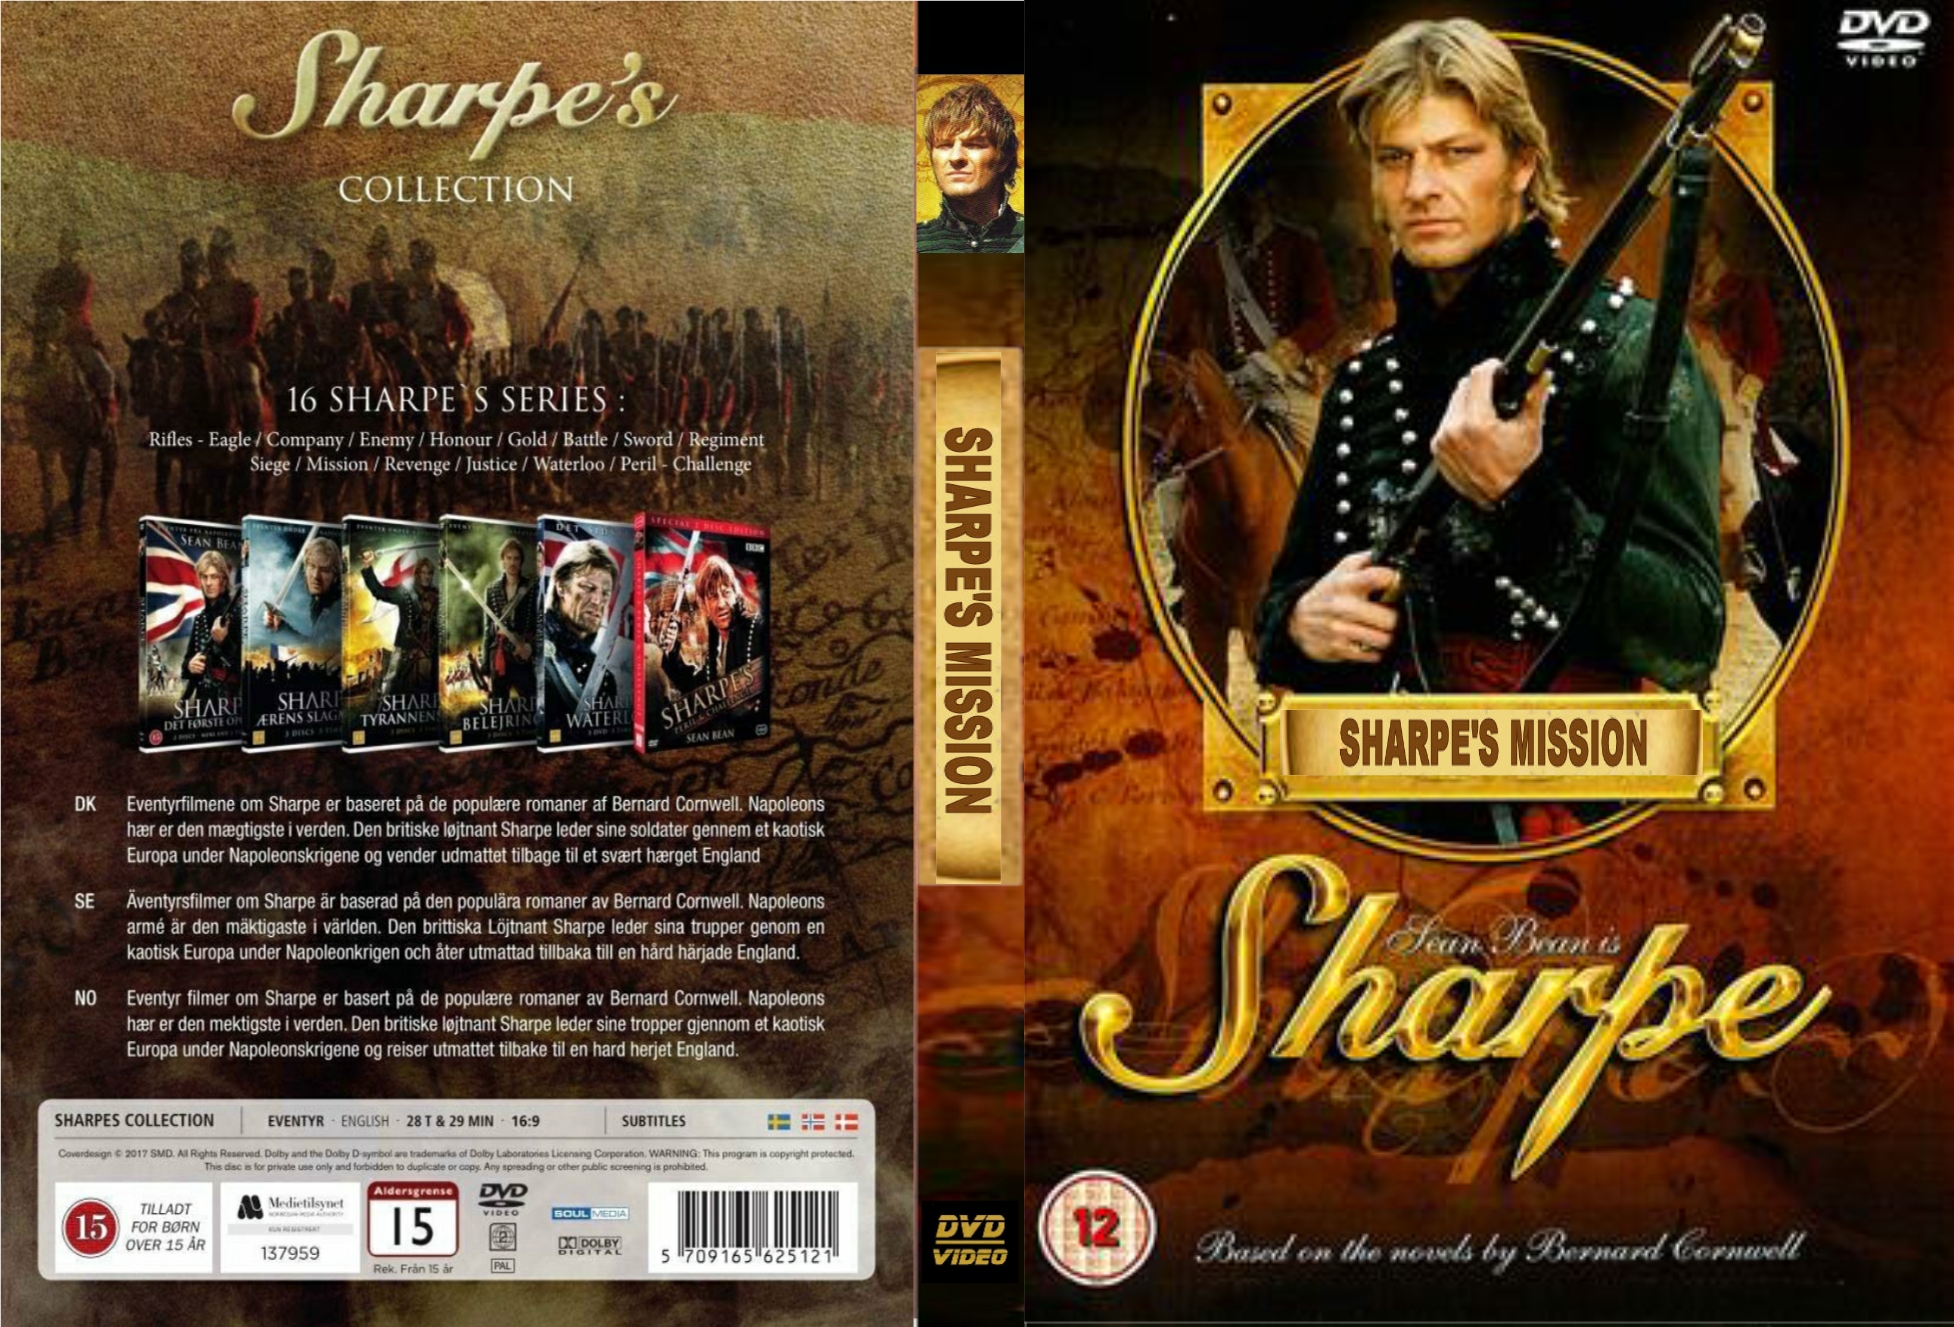 Sharpe's Mission - DvD 11